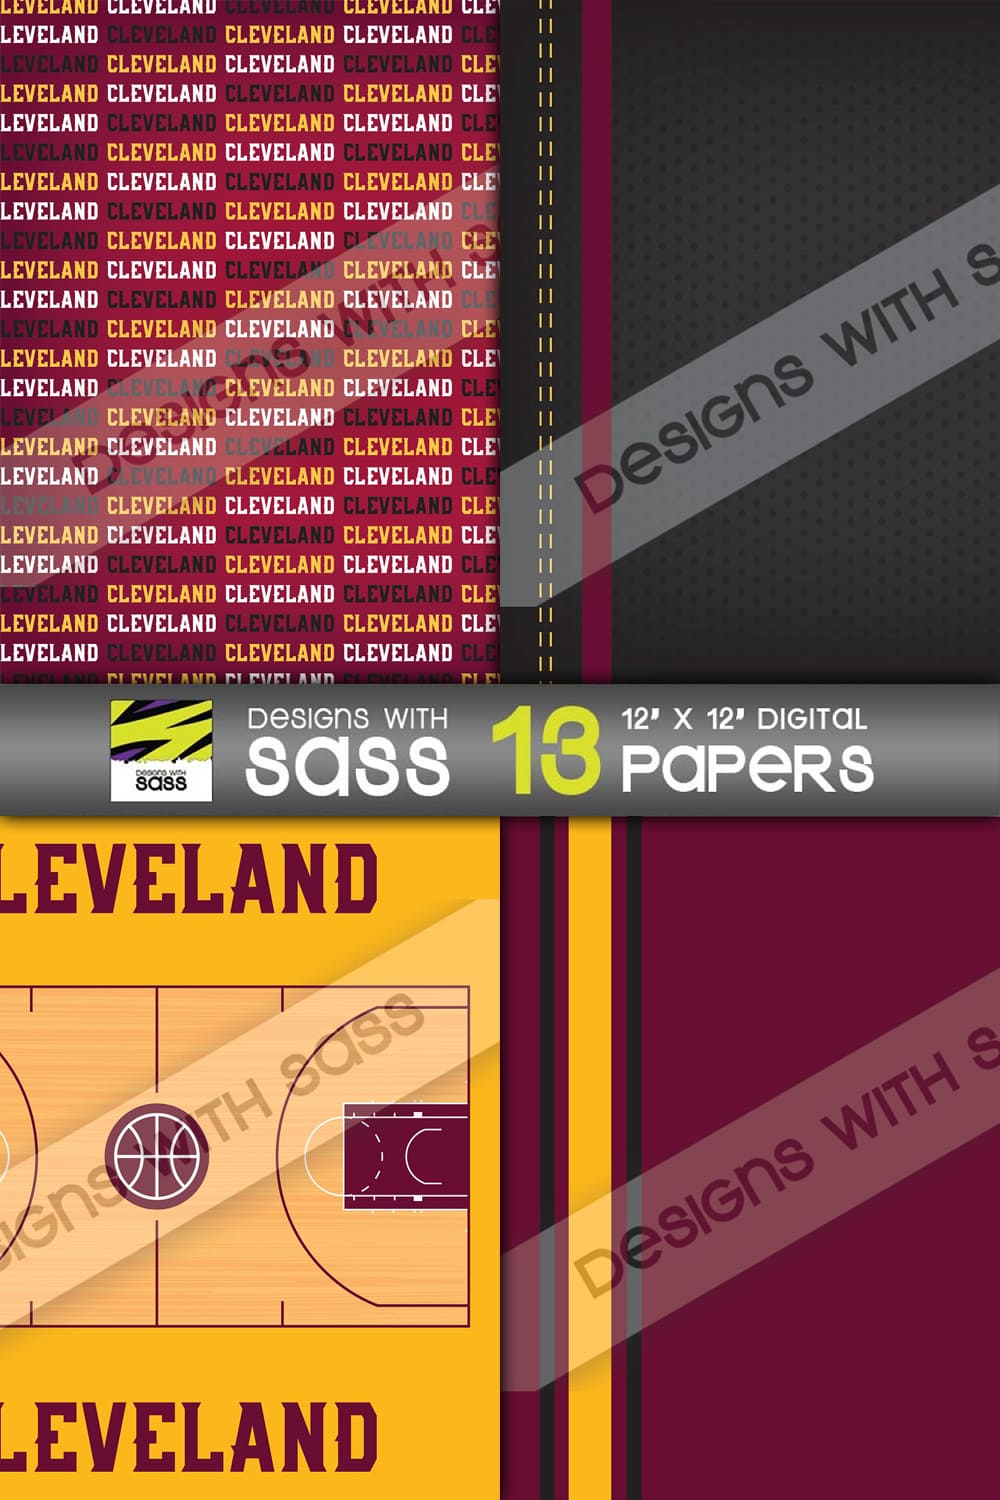 Cleveland basketball digital paper - pinterest image preview.